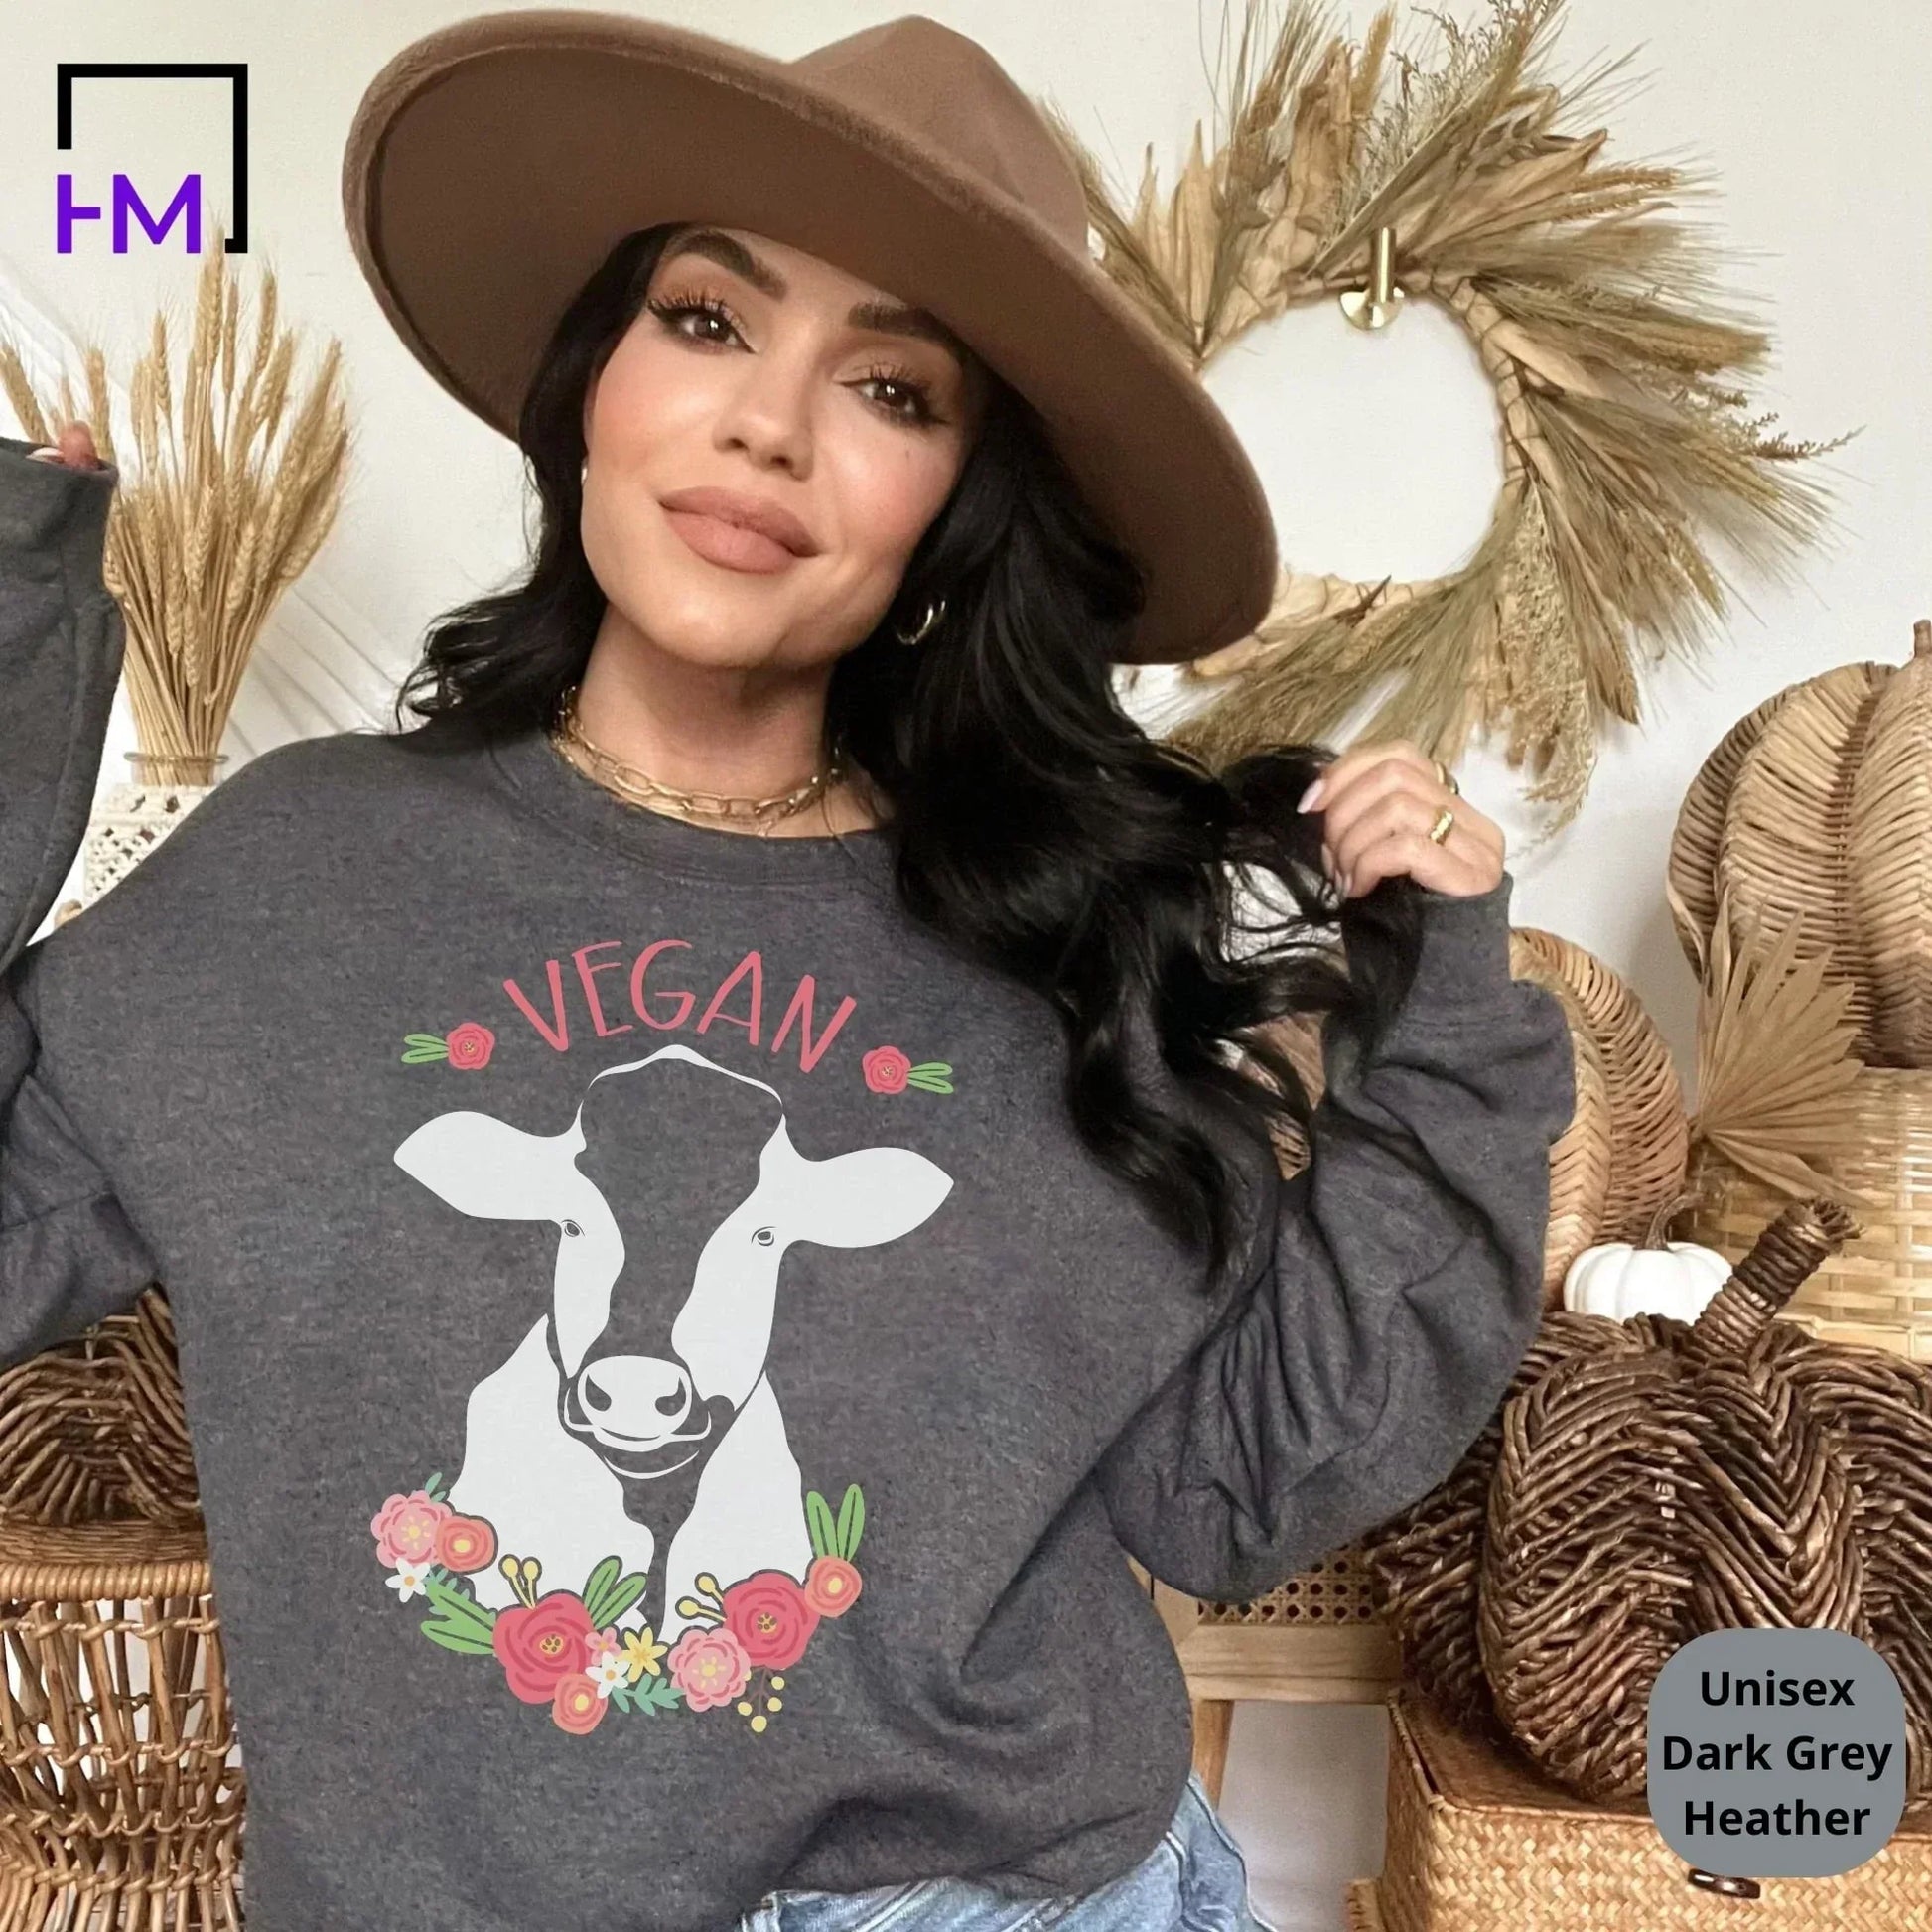 Vegan Shirt Women, Gift for Vegan Woman, Herbivore Shirt, Vegan Clothing, Vegetable Shirt, Vegetarian Gifts for Her, Shirt for Vegetarian